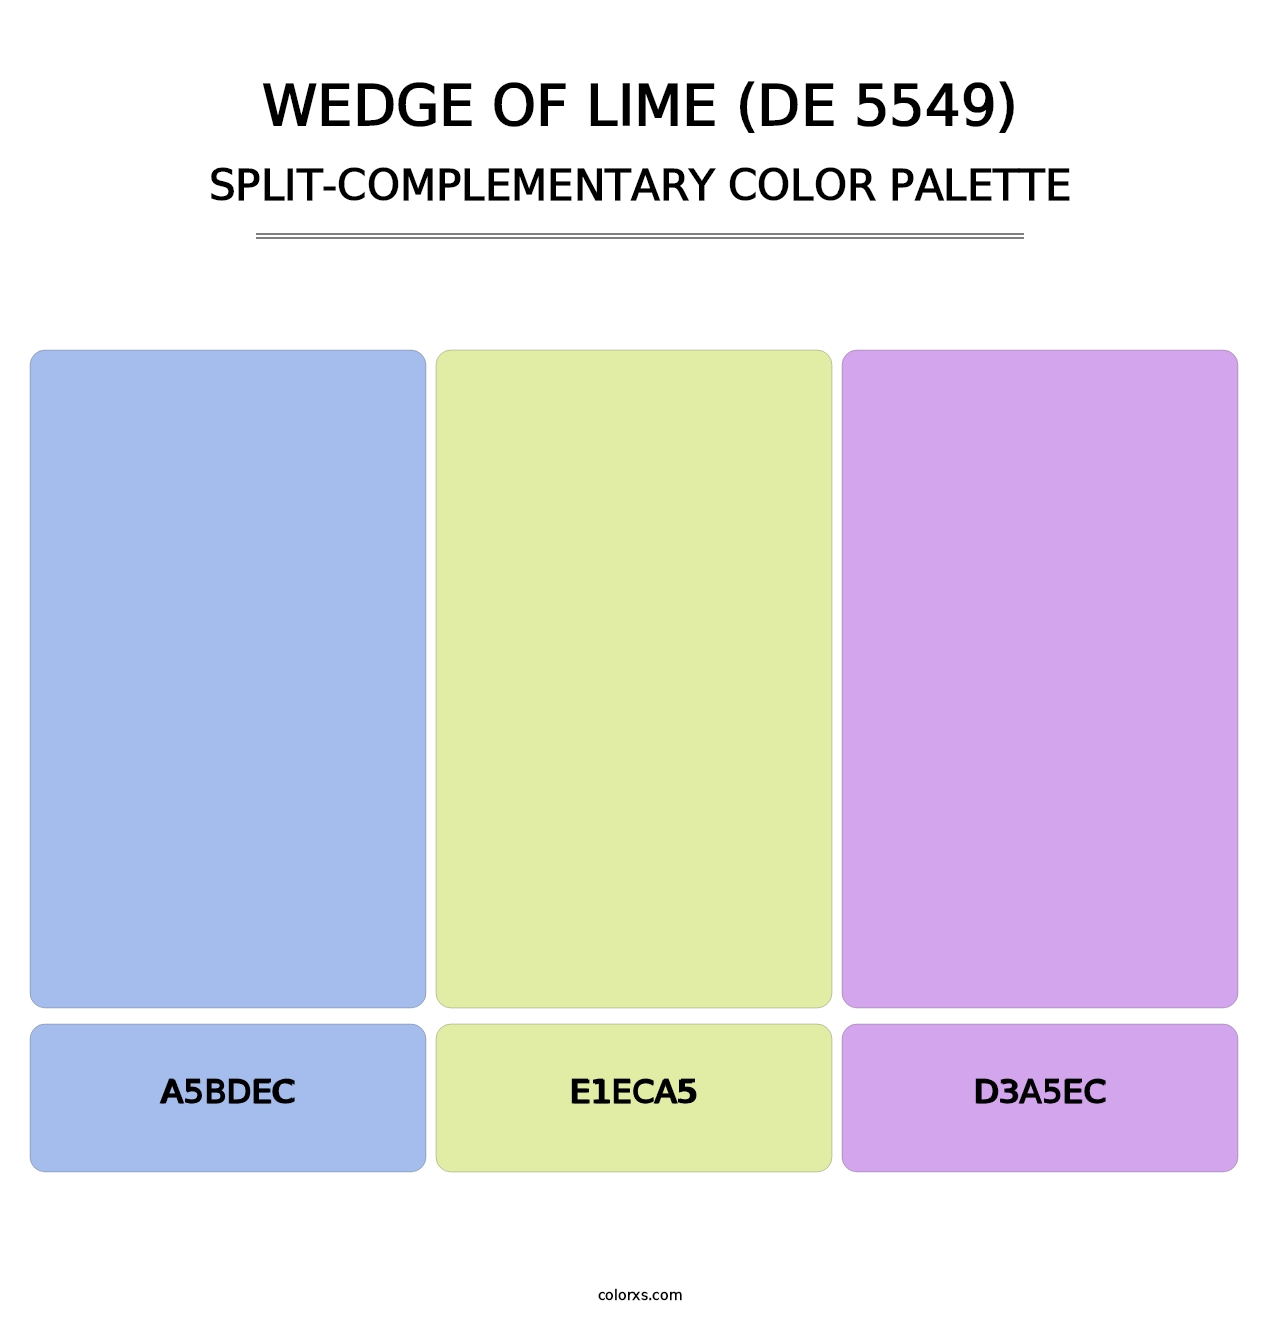 Wedge of Lime (DE 5549) - Split-Complementary Color Palette